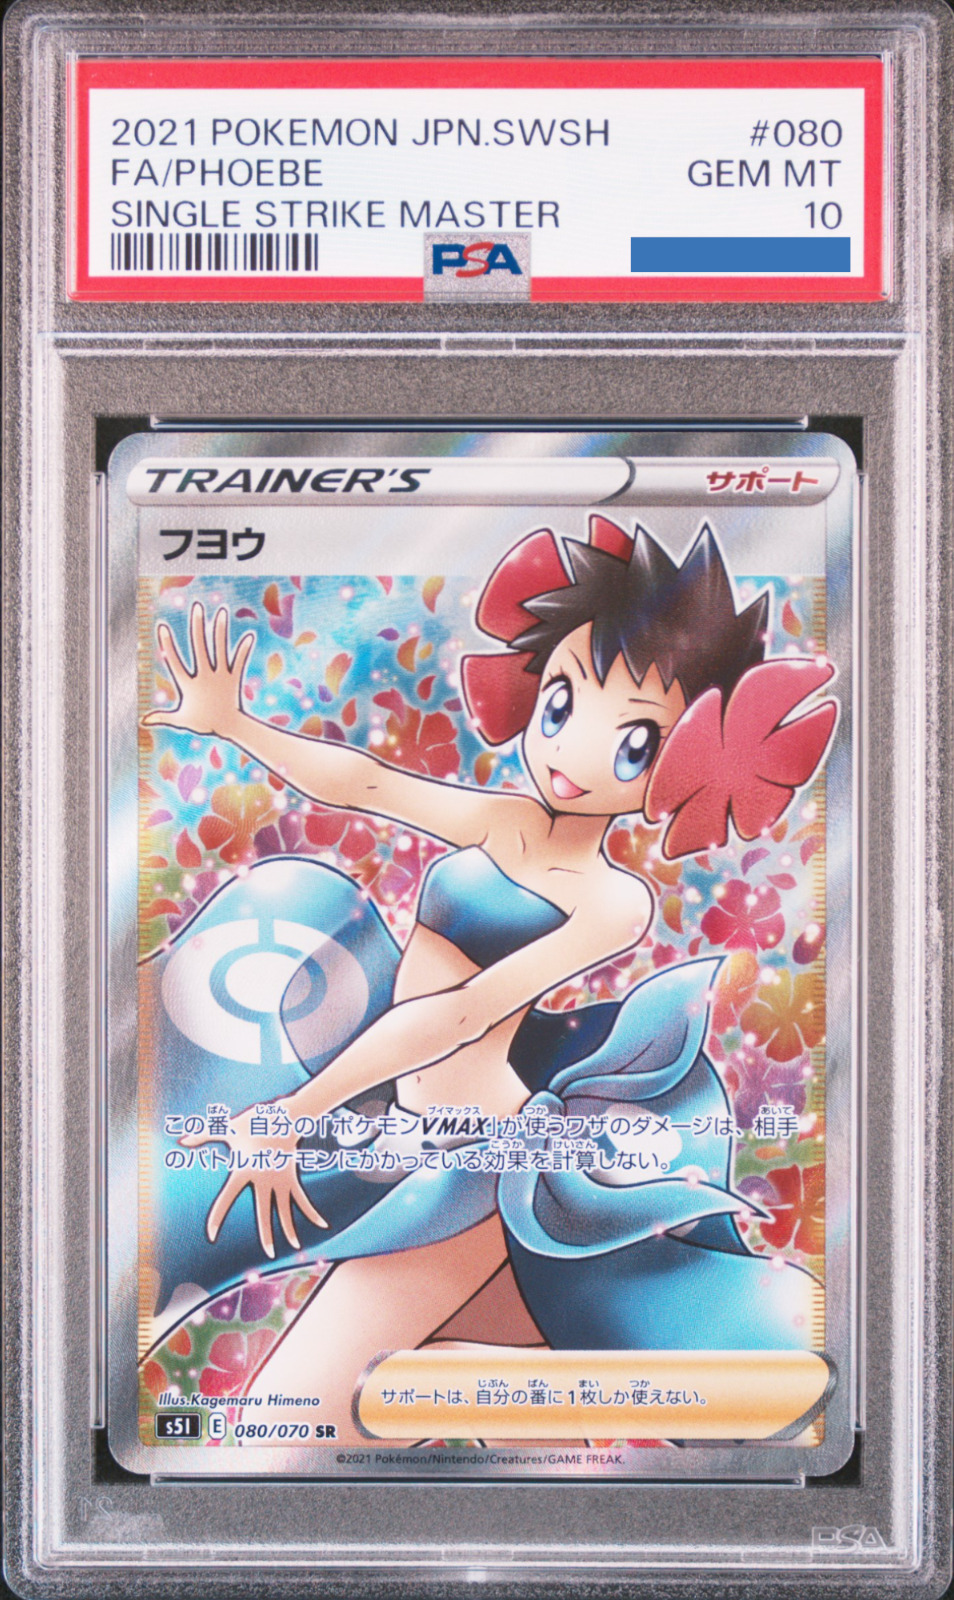 PSA 10 Phoebe 080/070 Full Art Waifu Single Strike Master Japanese Pokemon Card